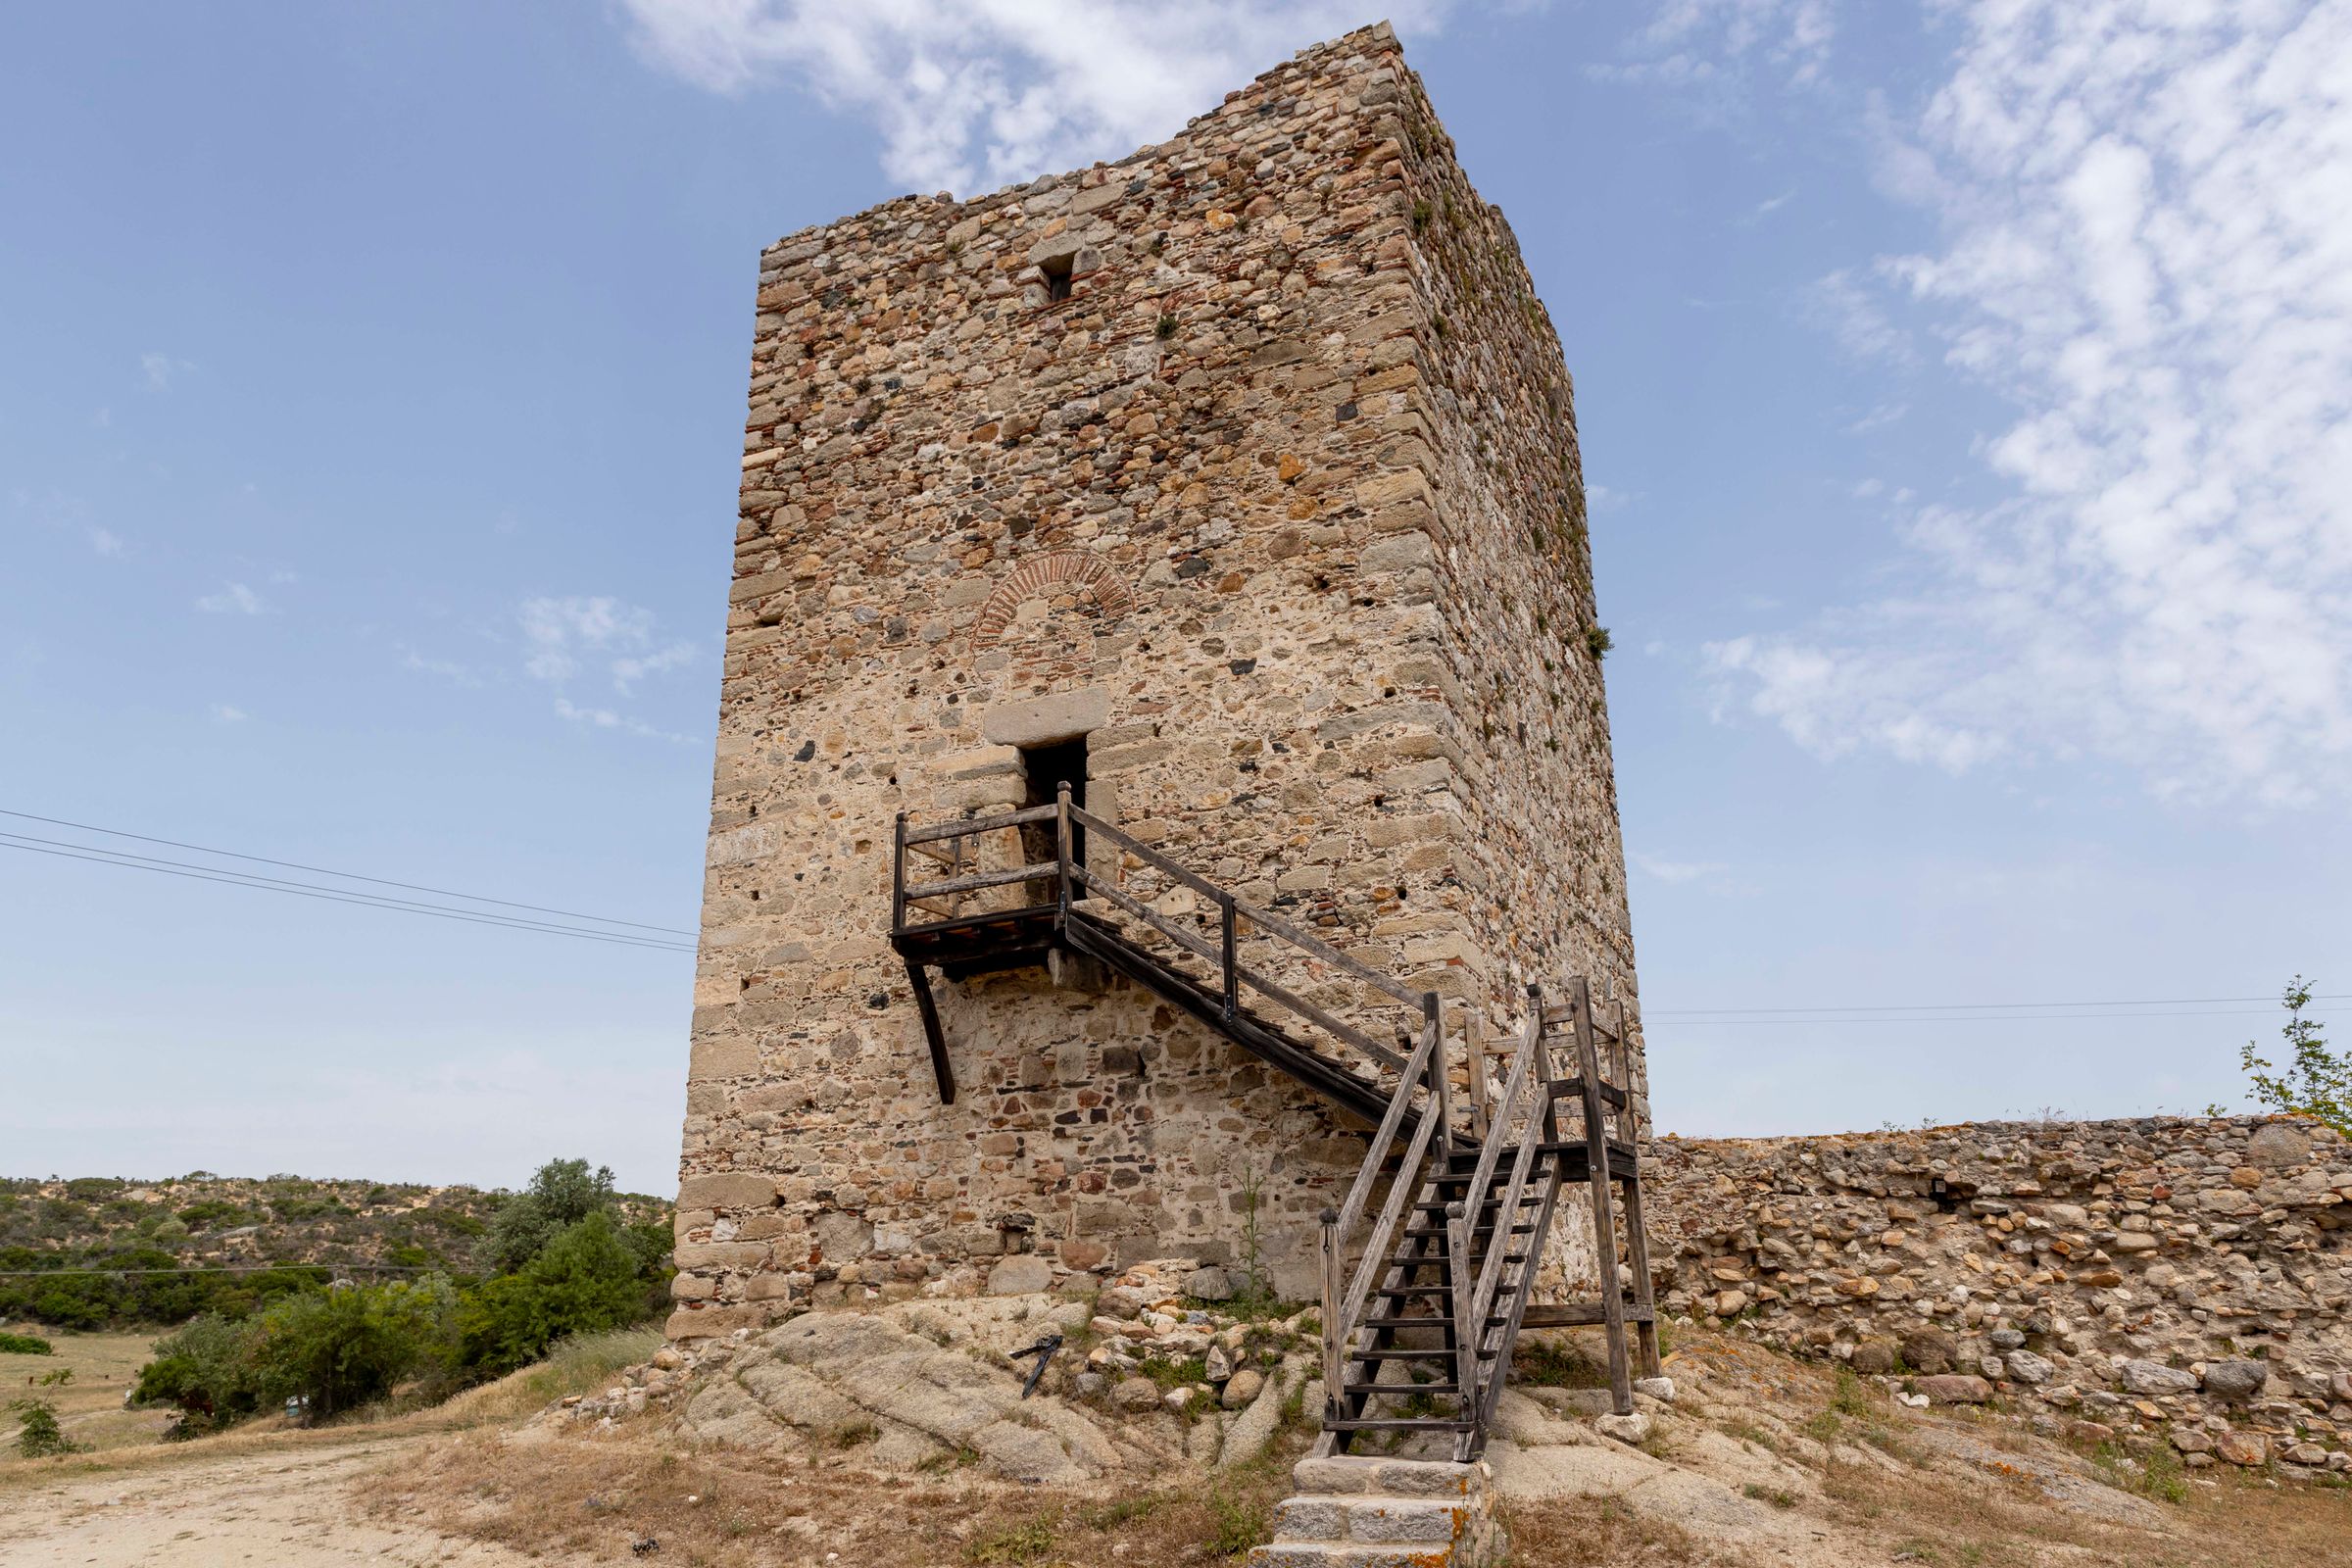 Kruna Tower